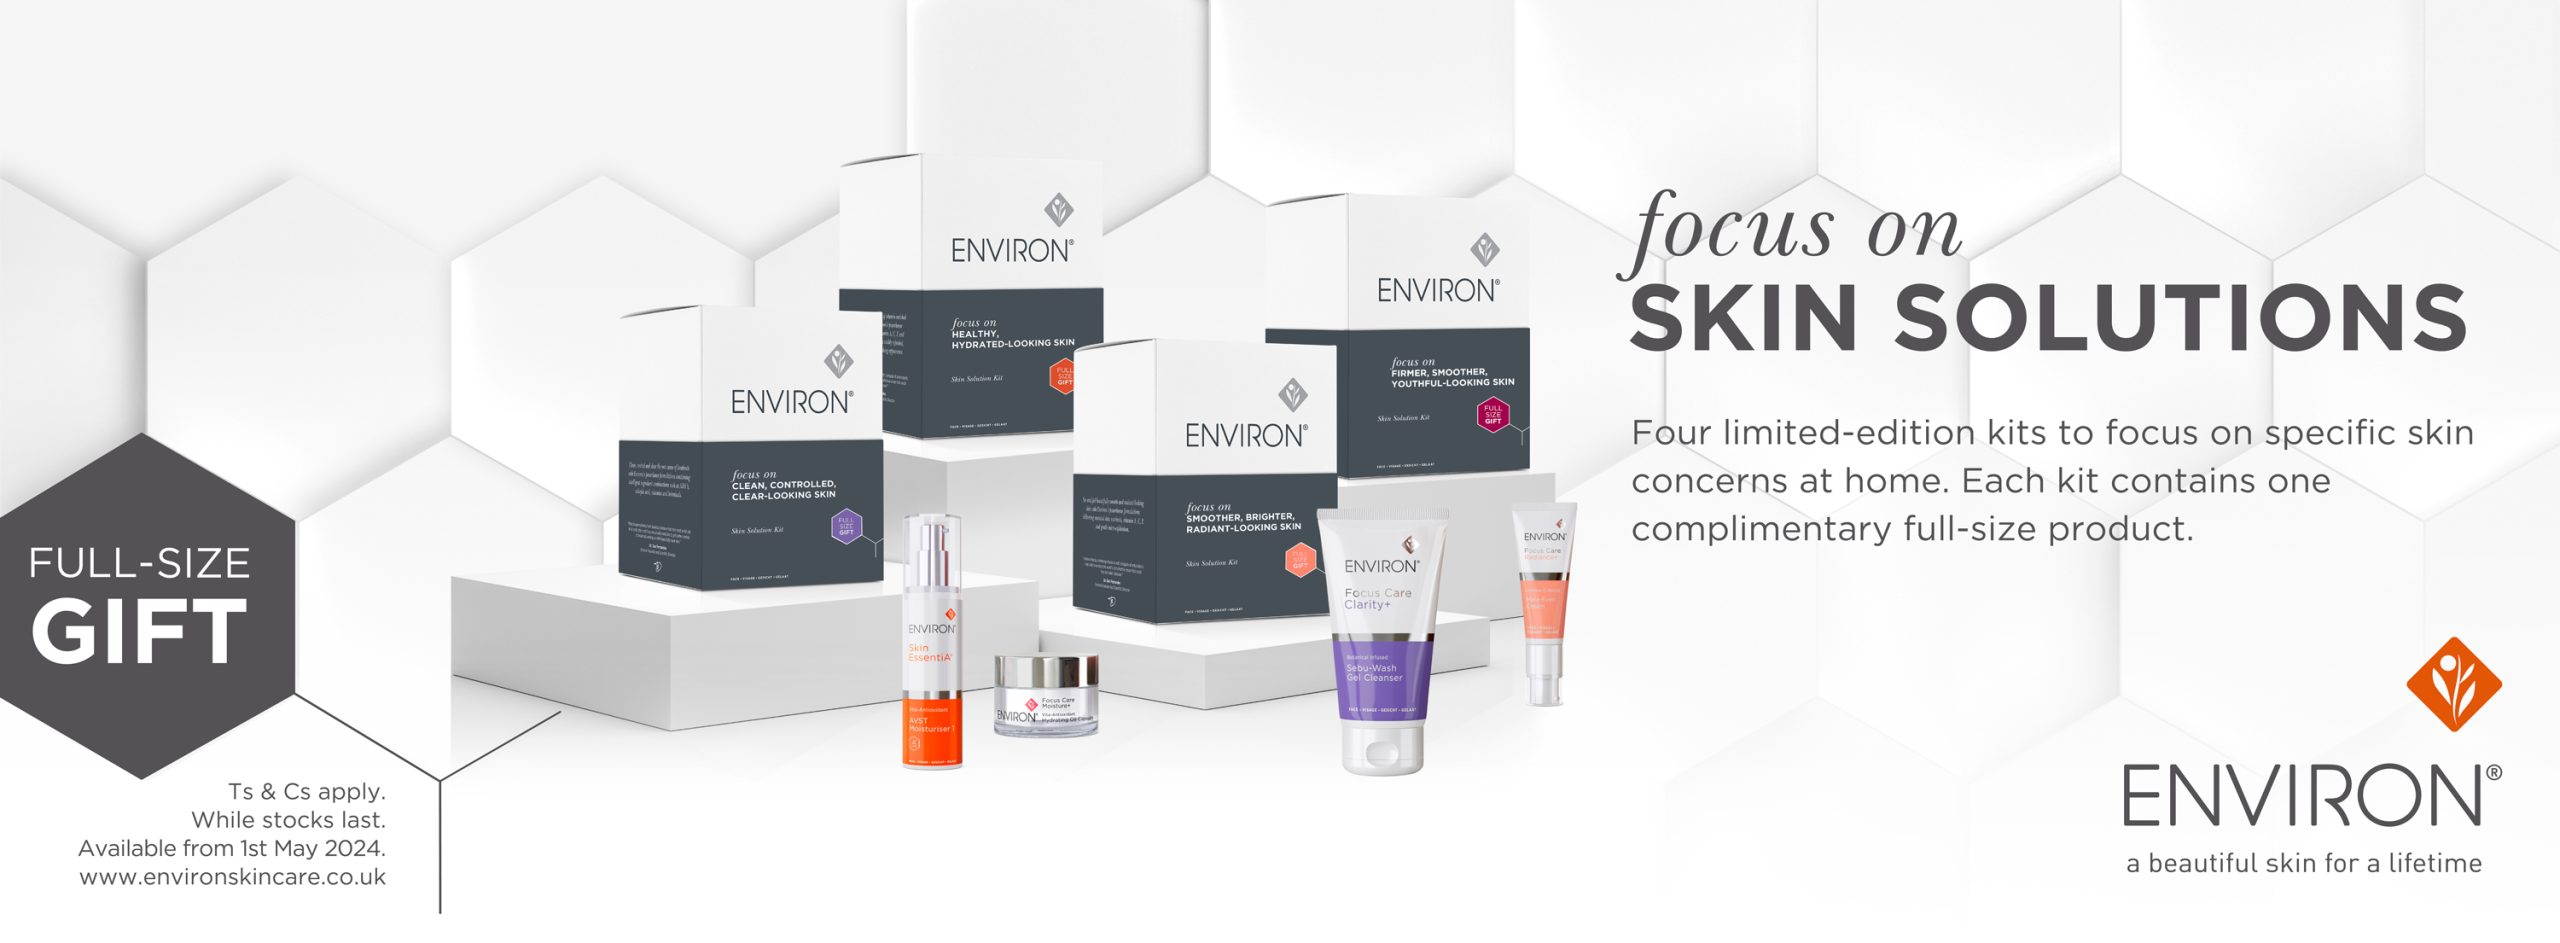 Environ Skin Solutions